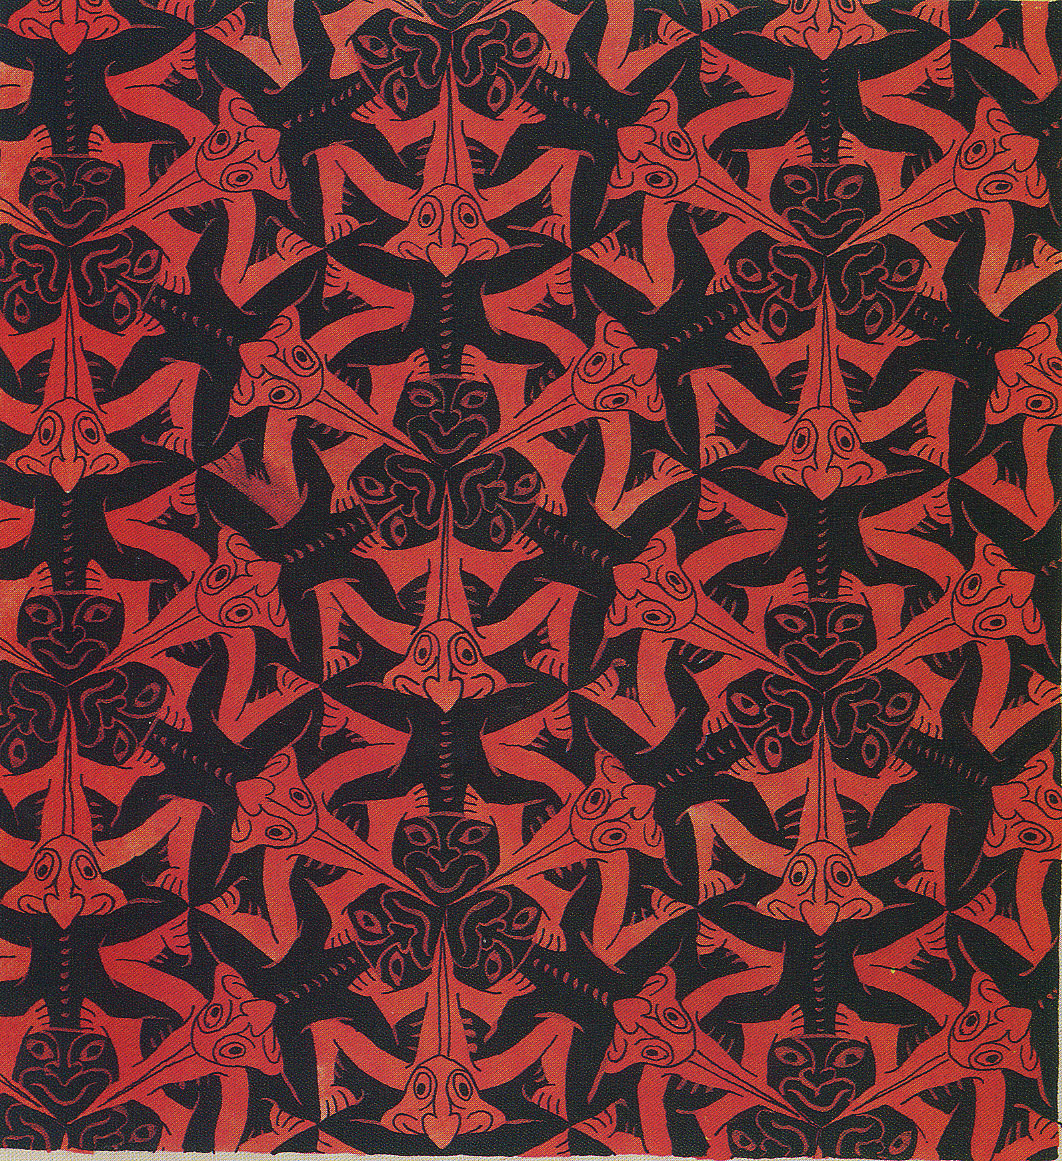 More Wallpaper (tessellations) examples · Four Plane symmetries. Escher's 